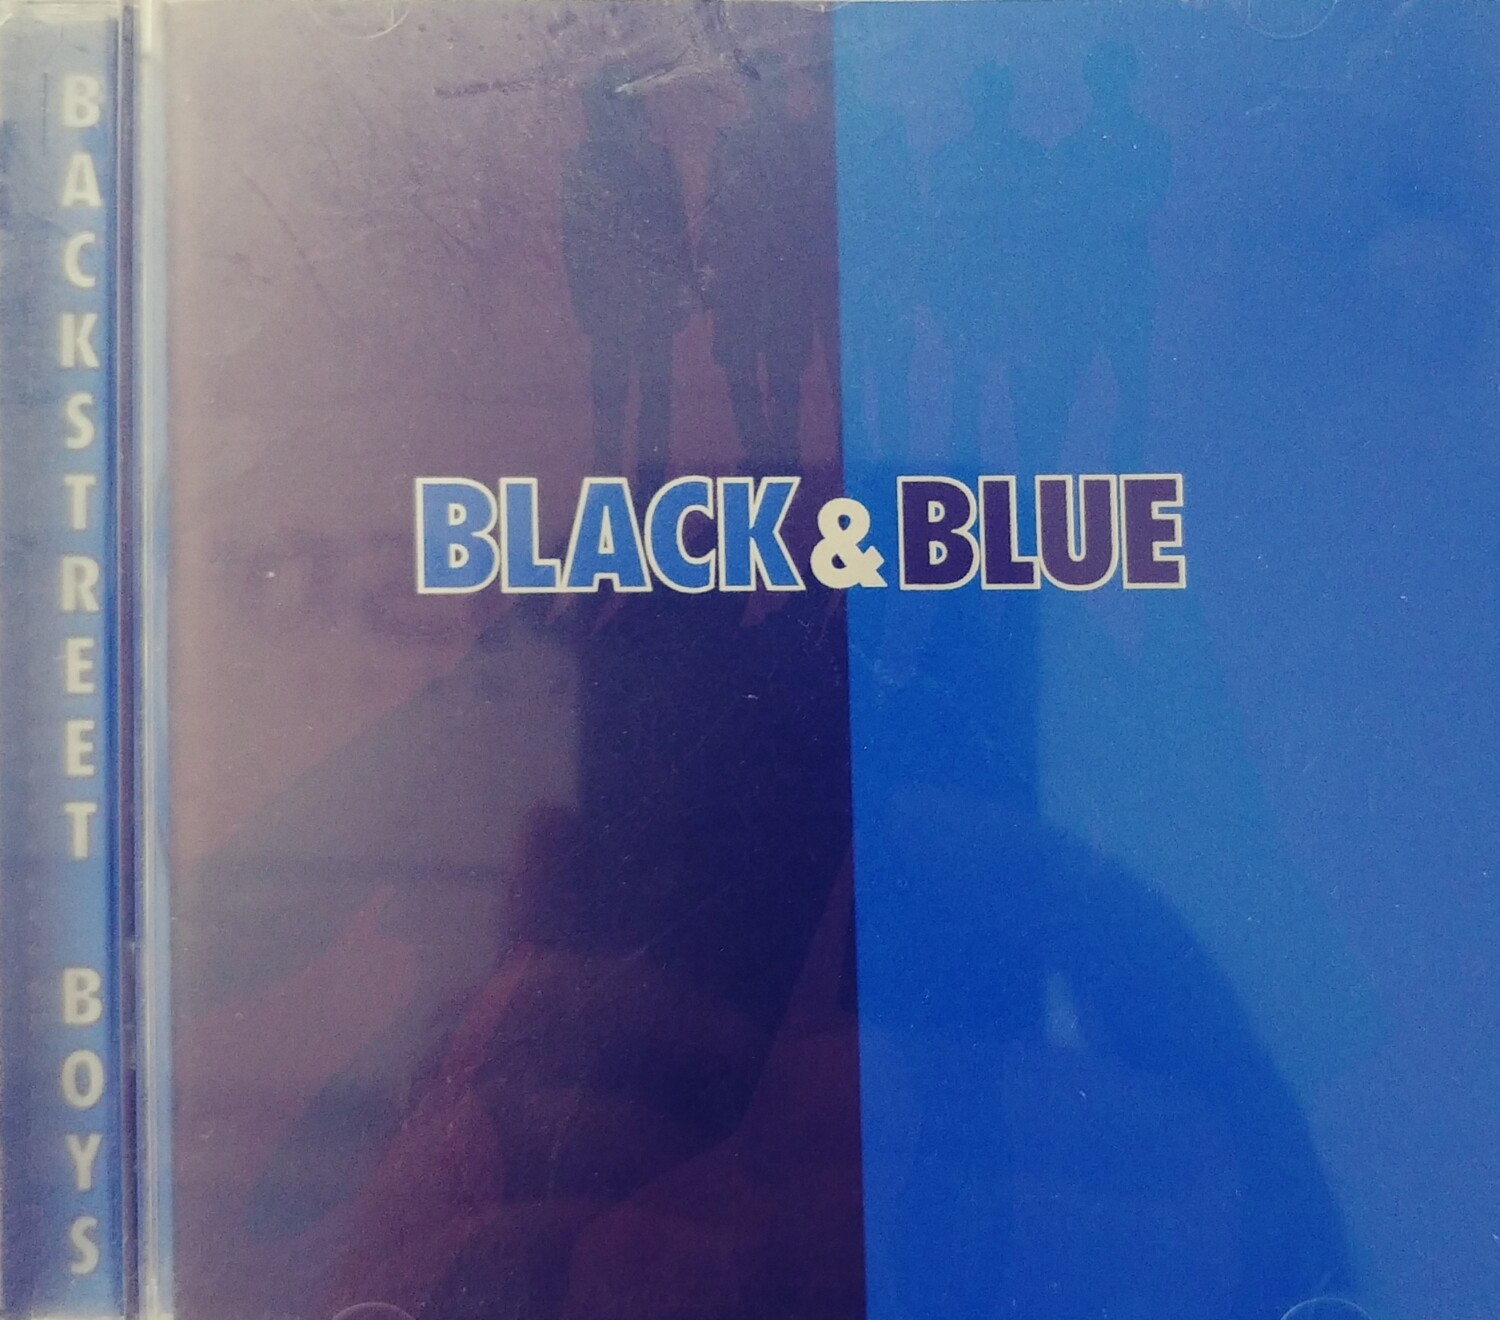 Backstreet Boys - Black & Blue (CD)